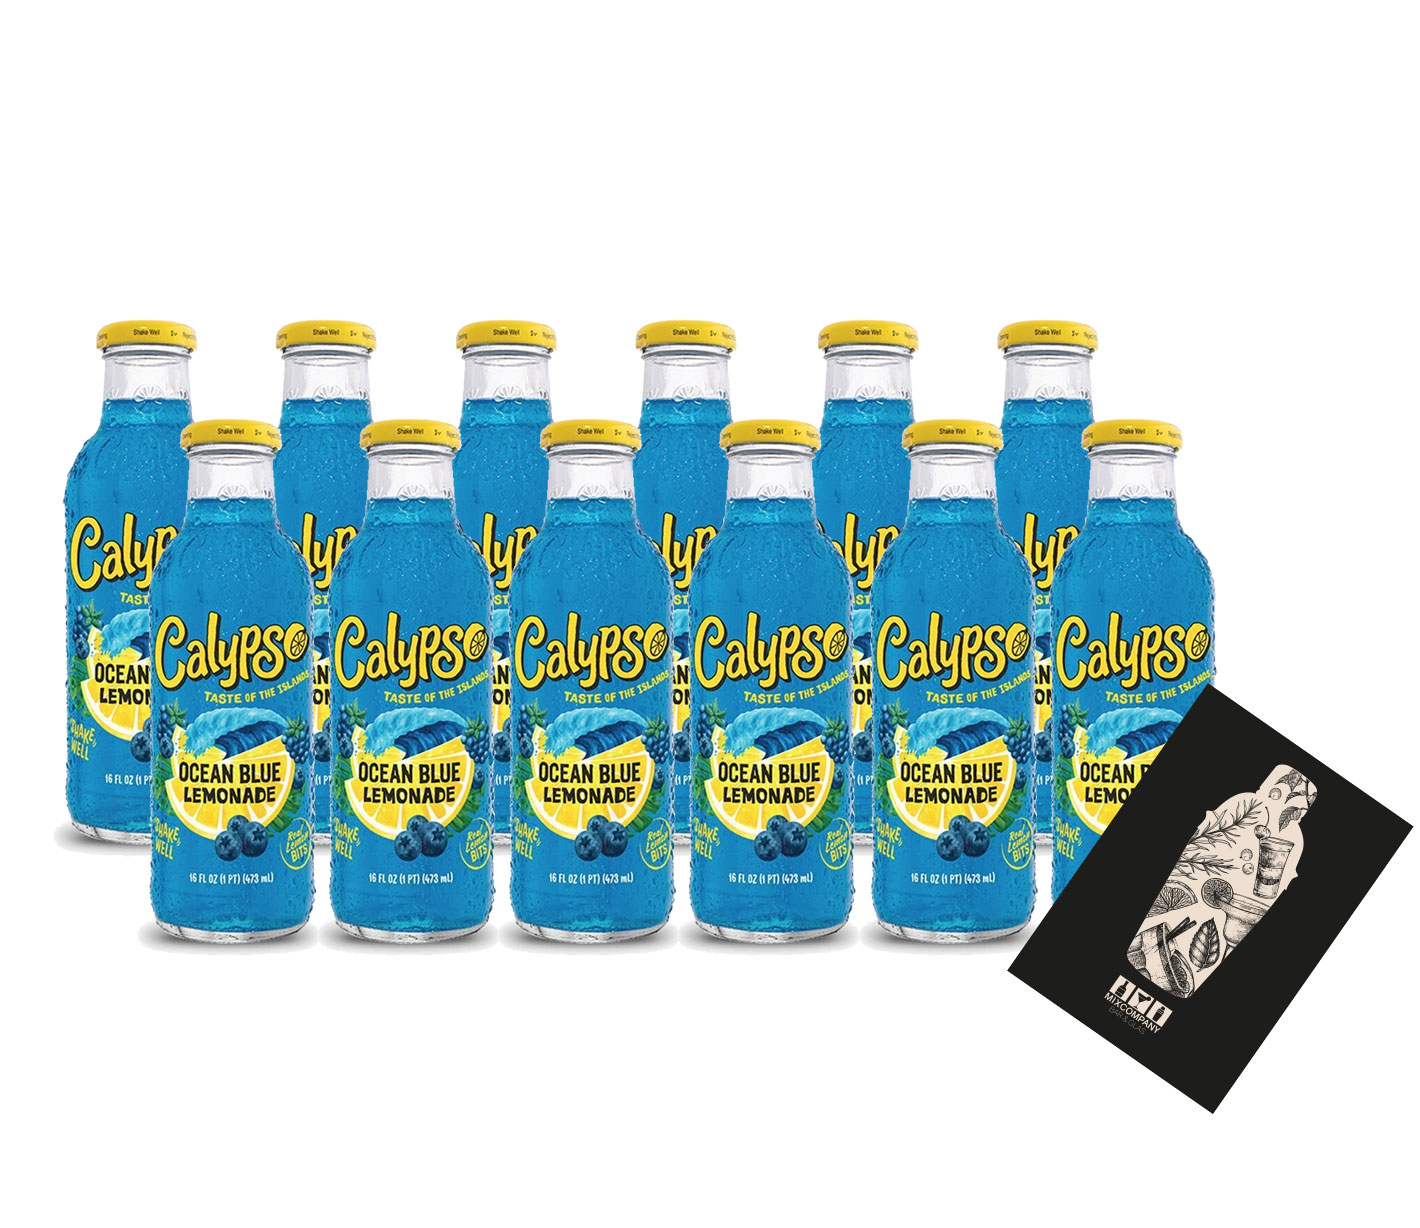 Calypso Ocean Blue Lemonade 12x 473ml inkl. Pfand Einweg Blaubeere Brombeere blaue Himbeere Limonade